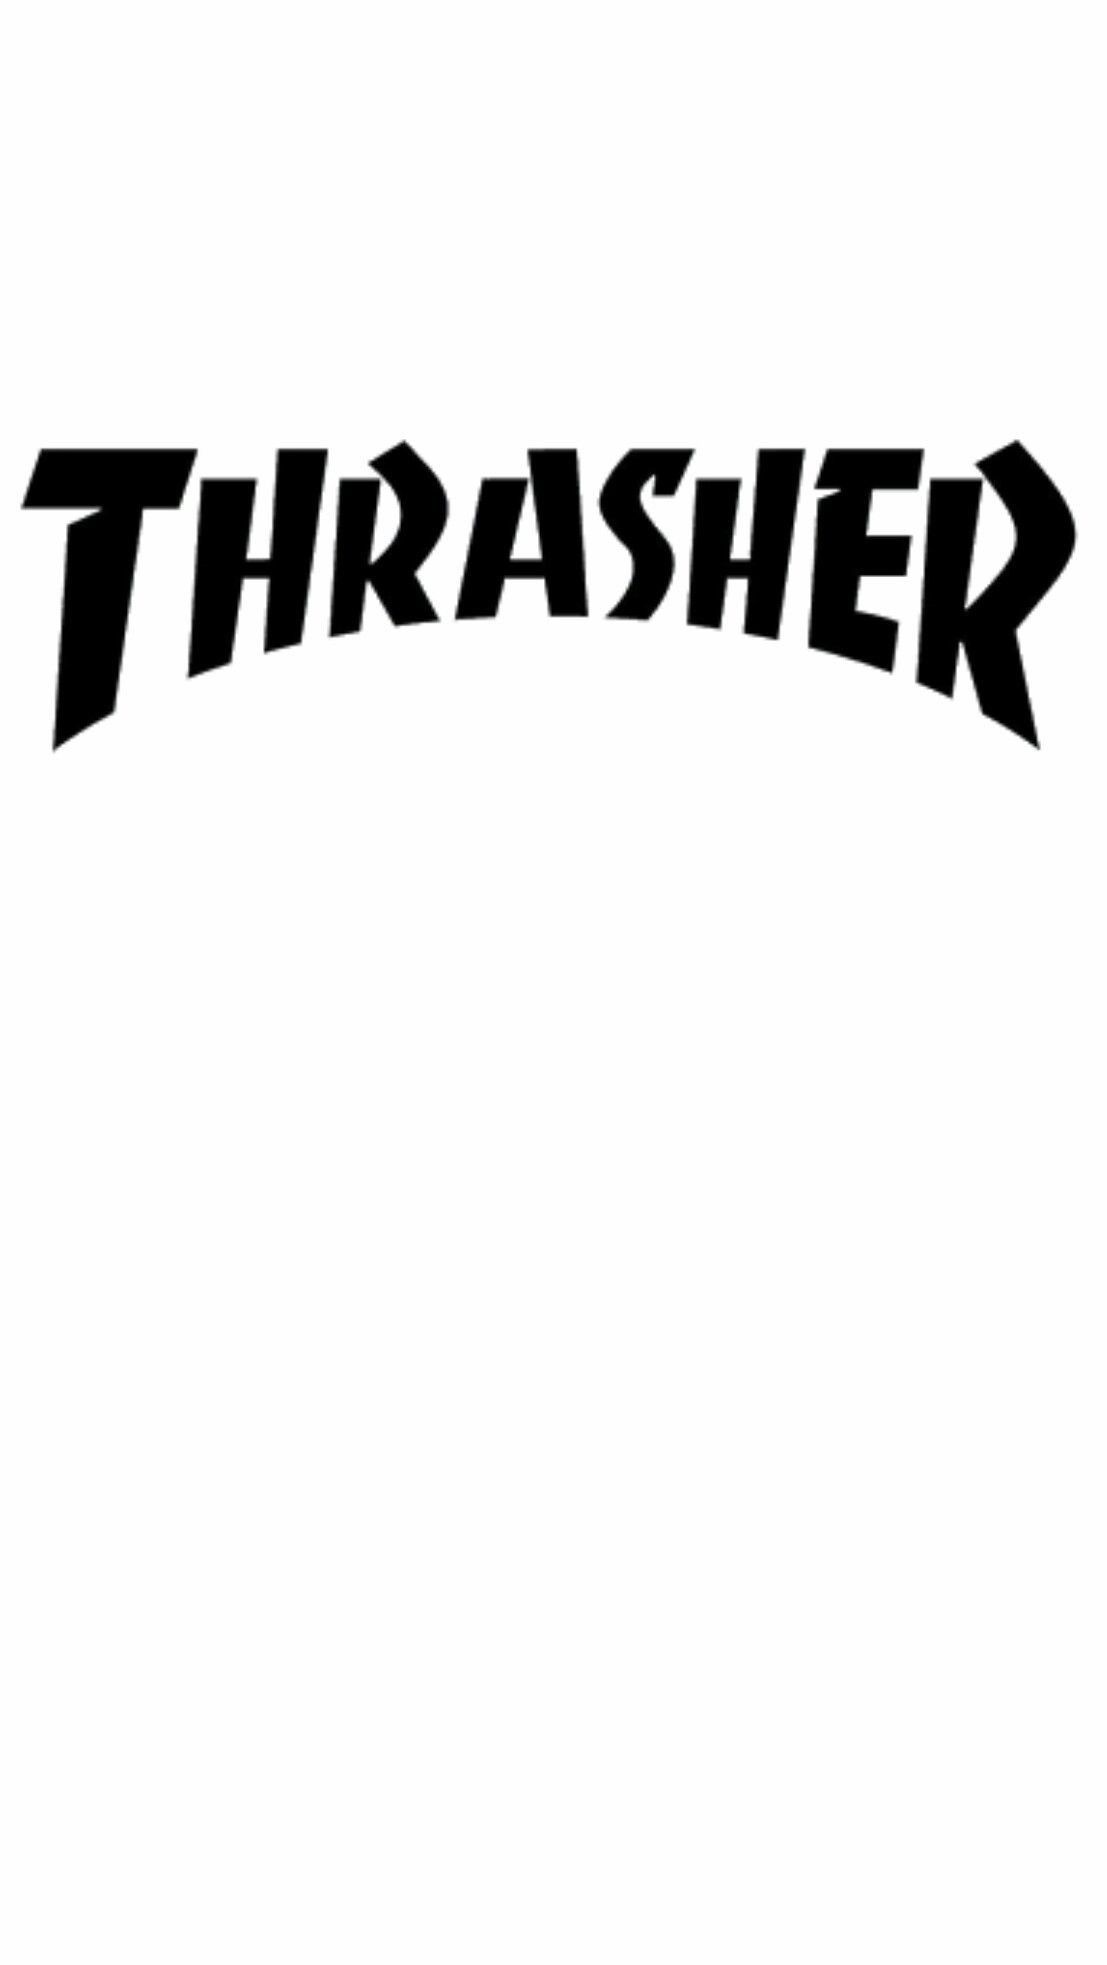 Thrasher iPhone Wallpaper Free Thrasher iPhone Background